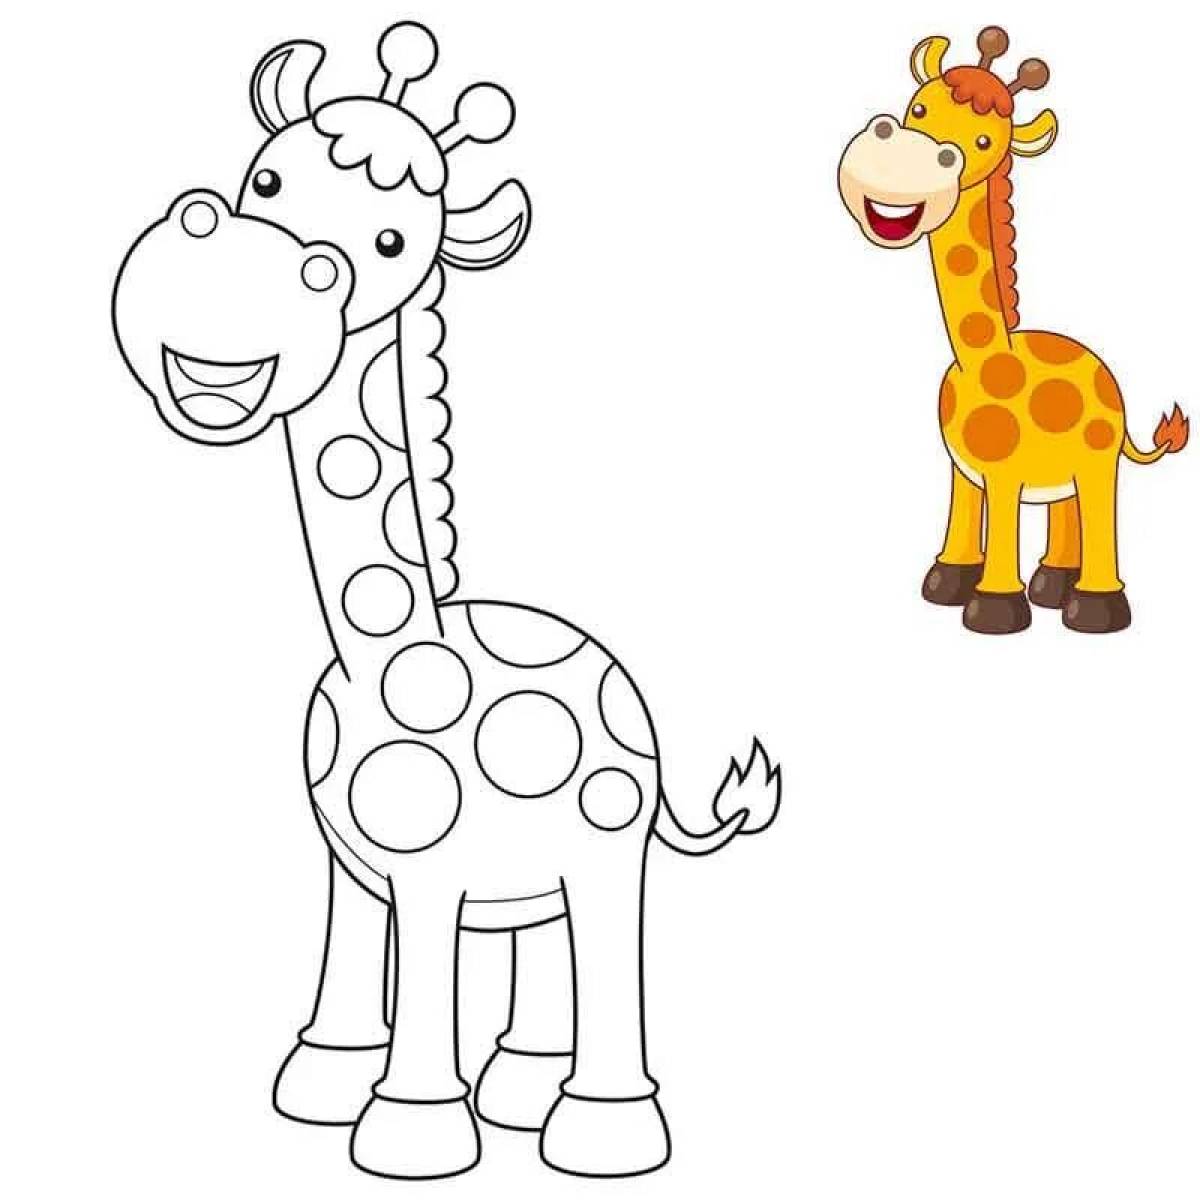 Fabulous giraffe coloring book for kids